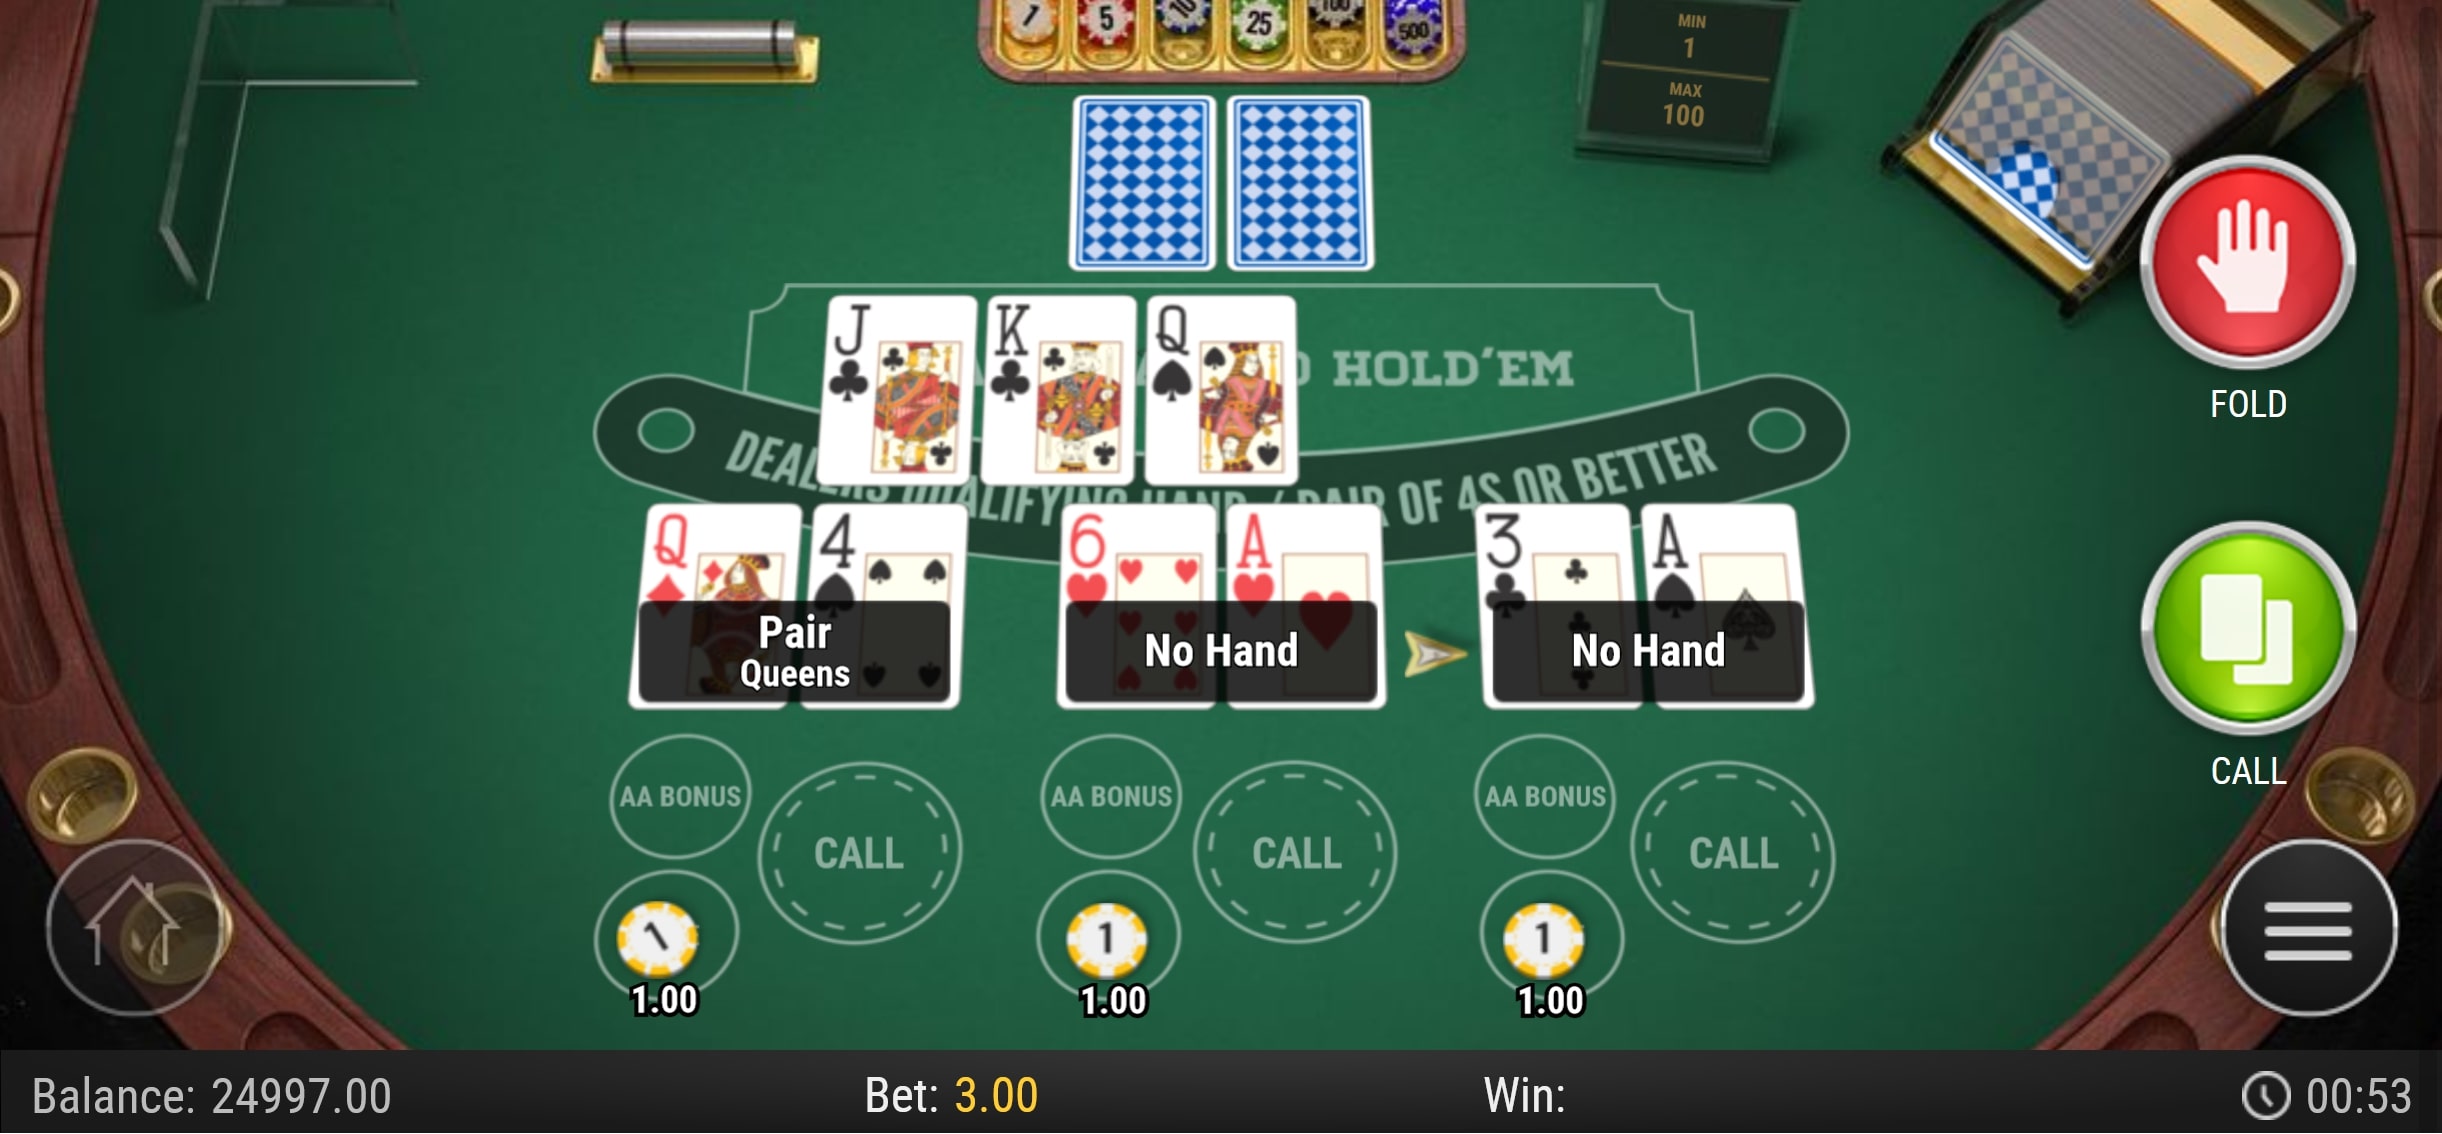 Klirr Casino Mobile Slots Review